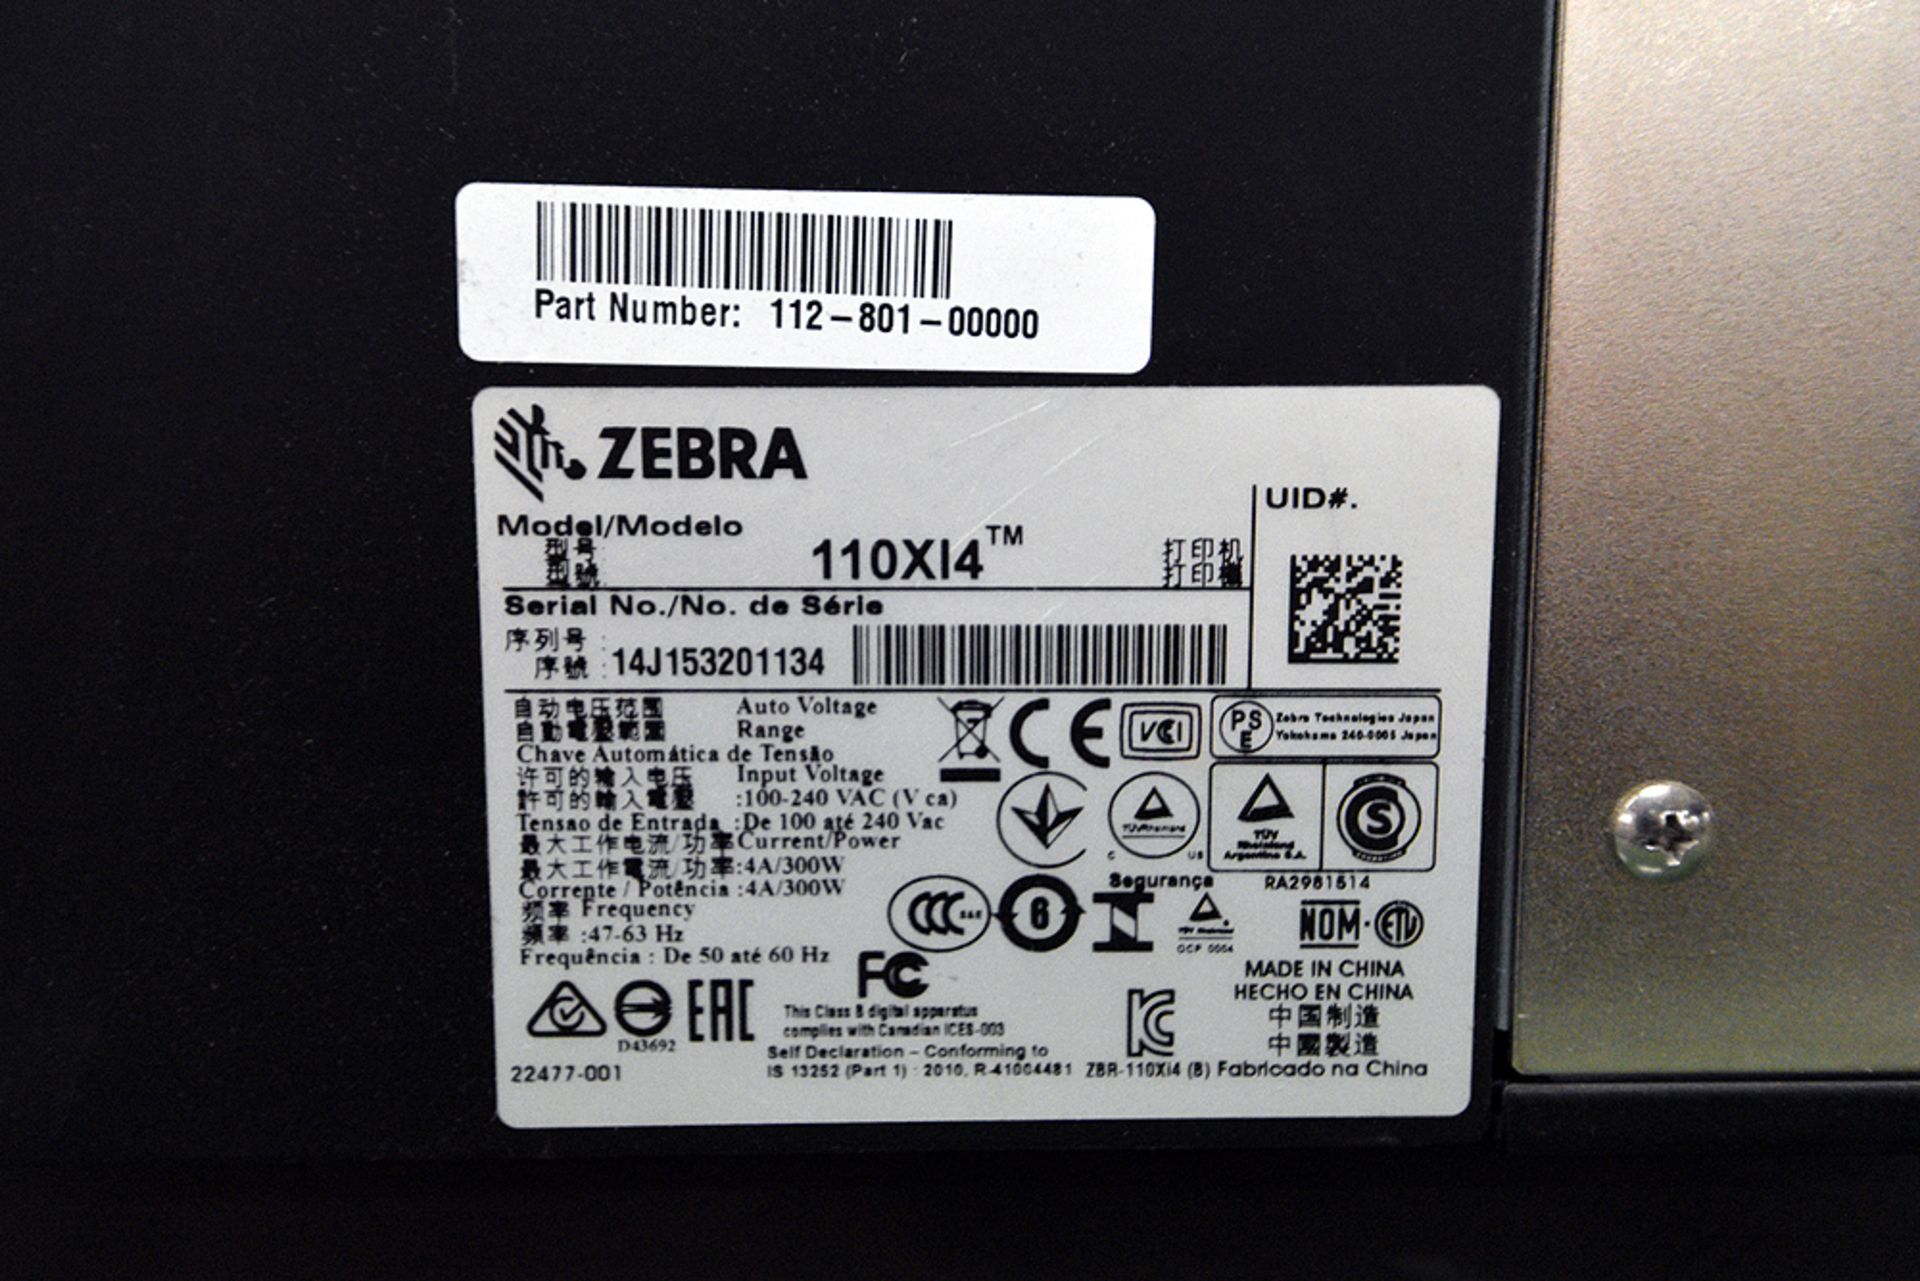 Zebra 110Xi4 Printer - Image 3 of 3